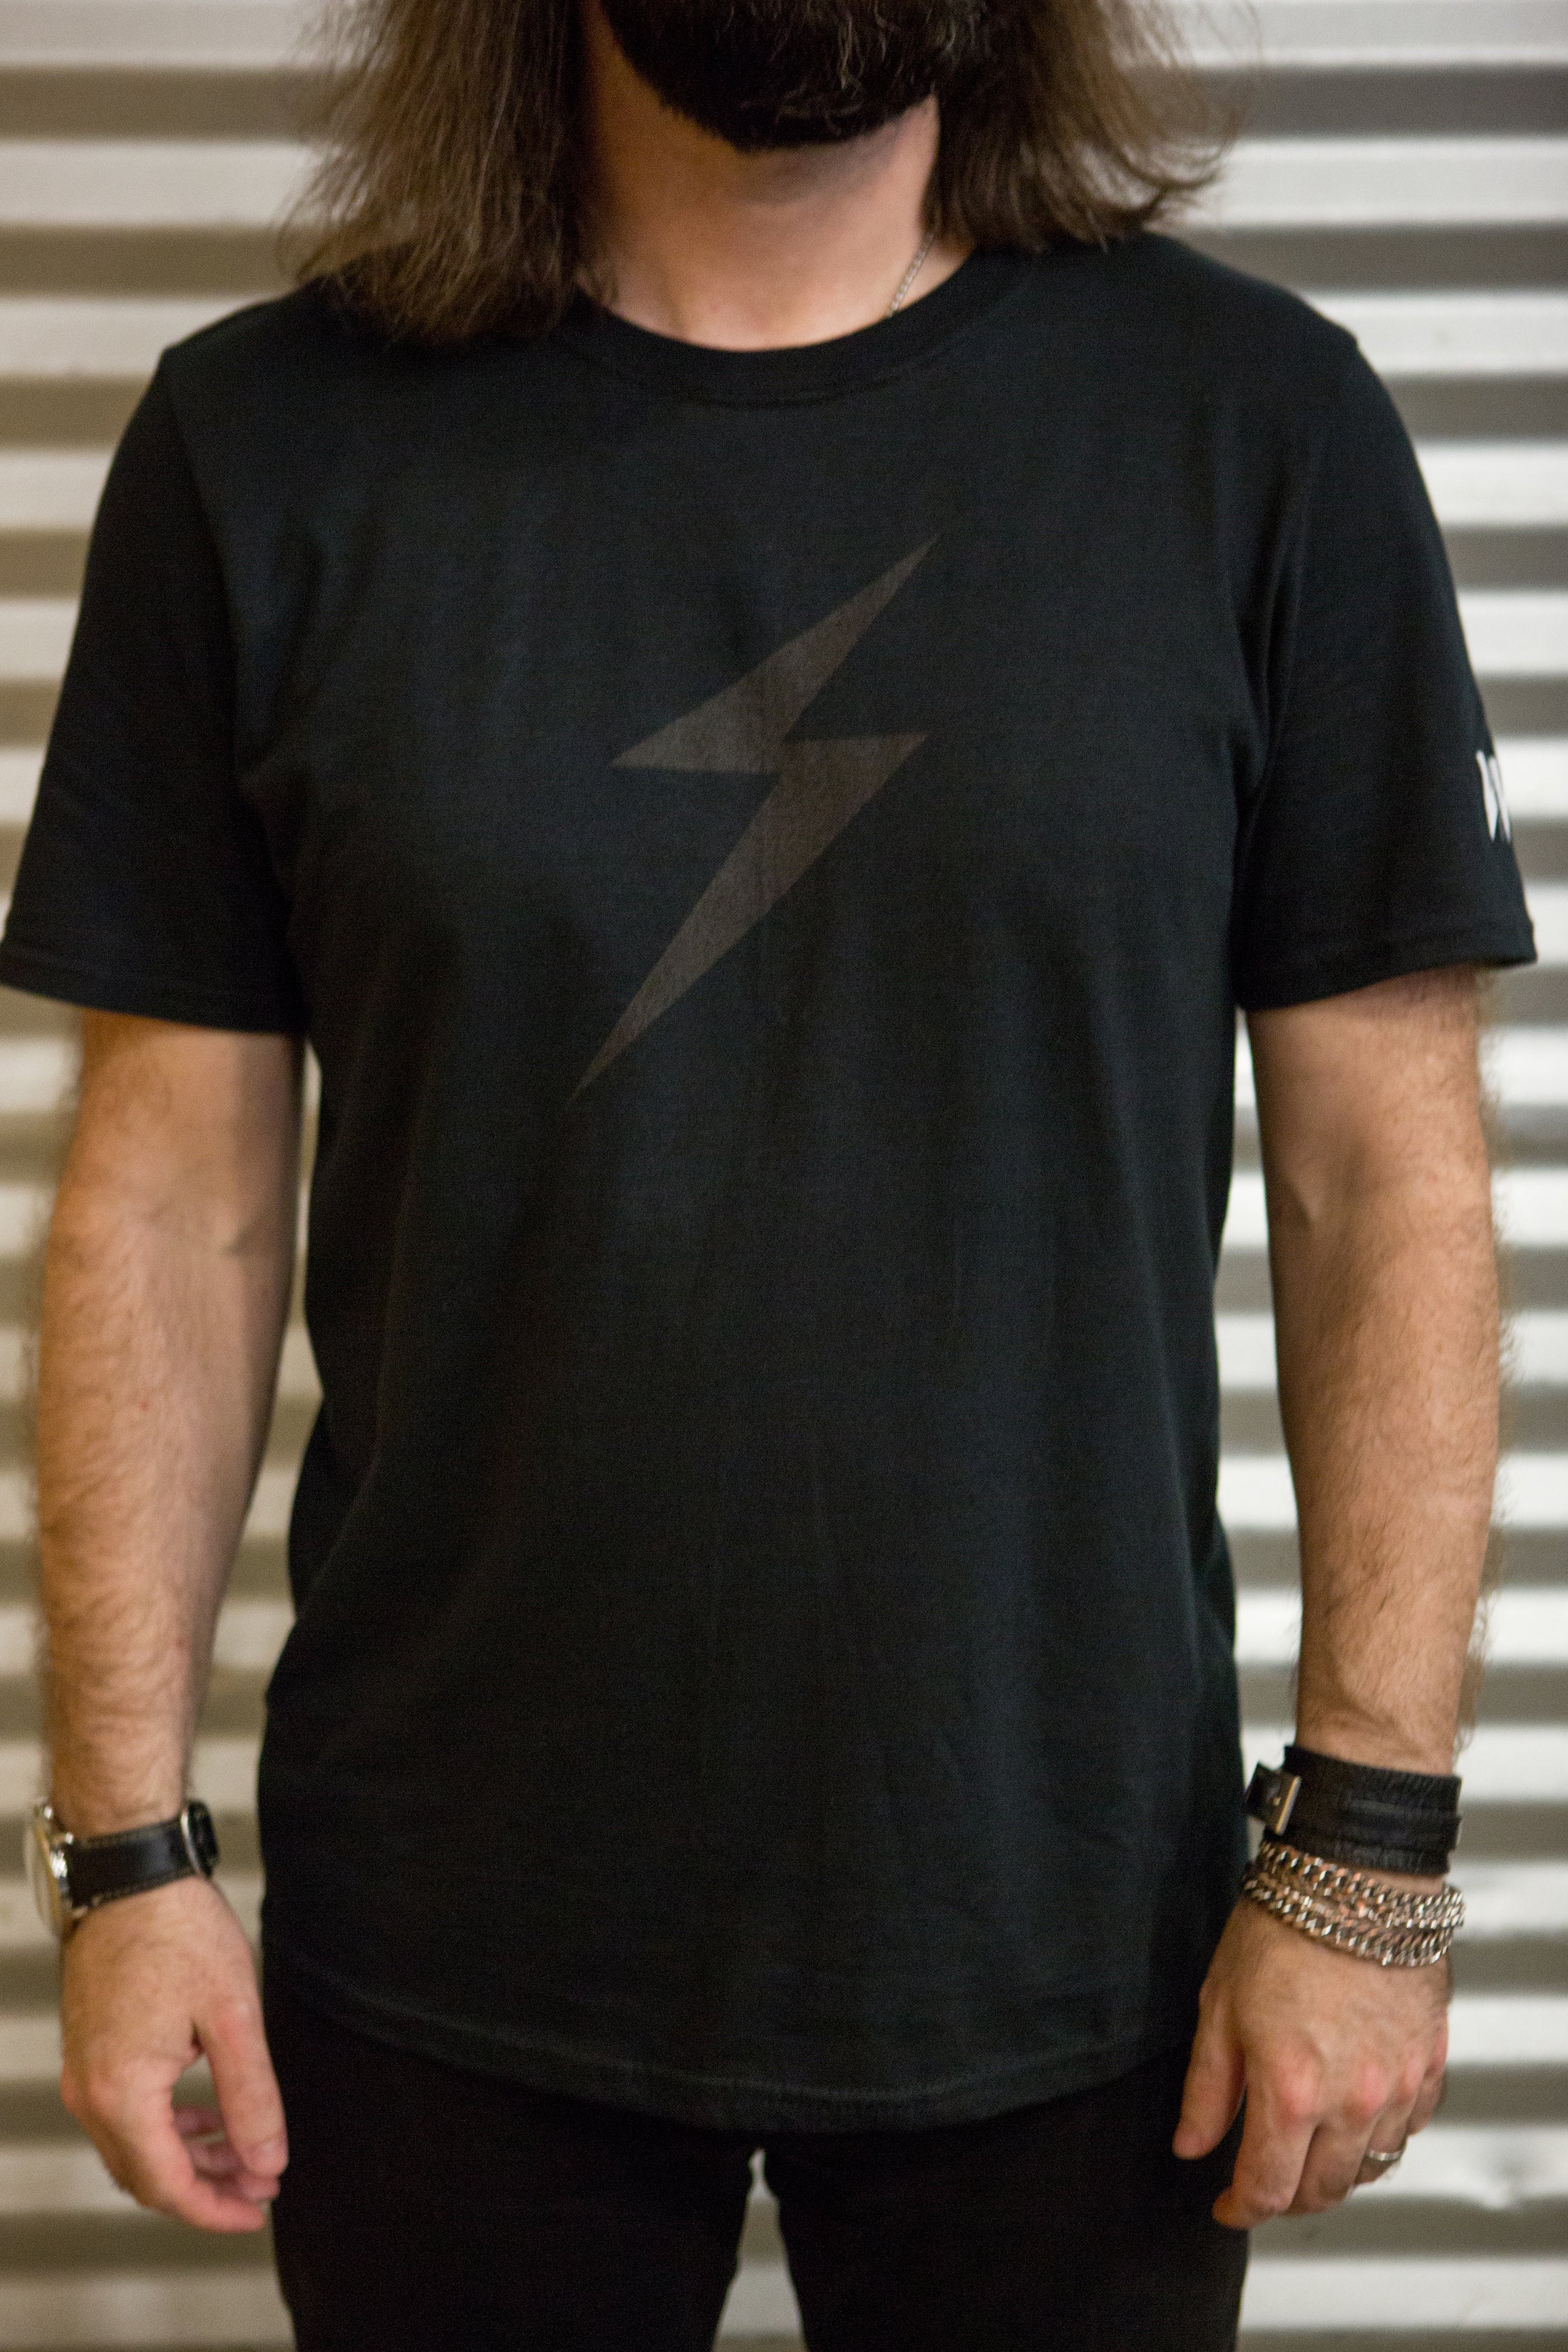 Black Lightning Bolt T-Shirt - Unisex